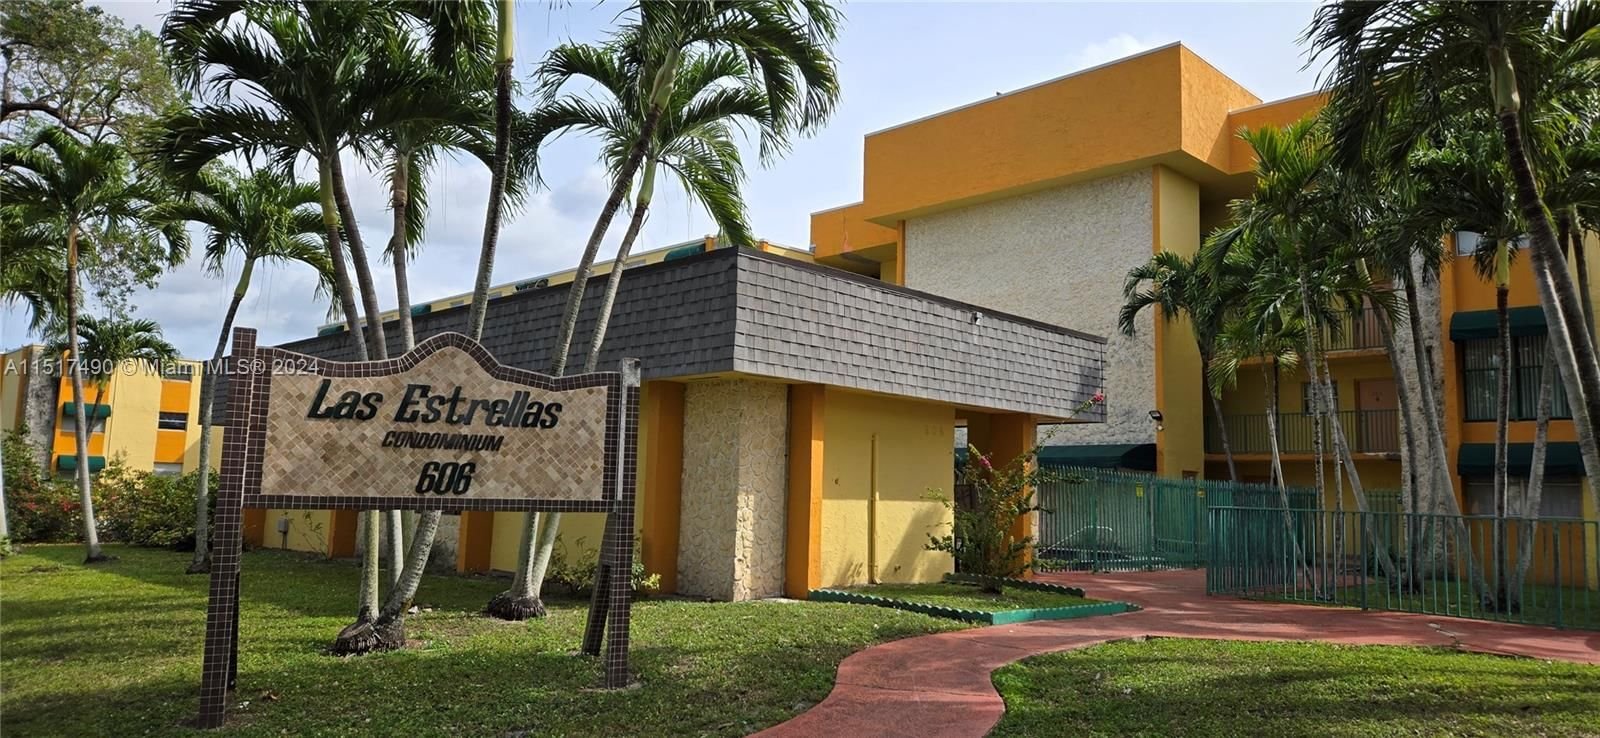 Real estate property located at 606 81st St #117, Miami-Dade County, LAS ESTRELLAS CONDO, Hialeah, FL